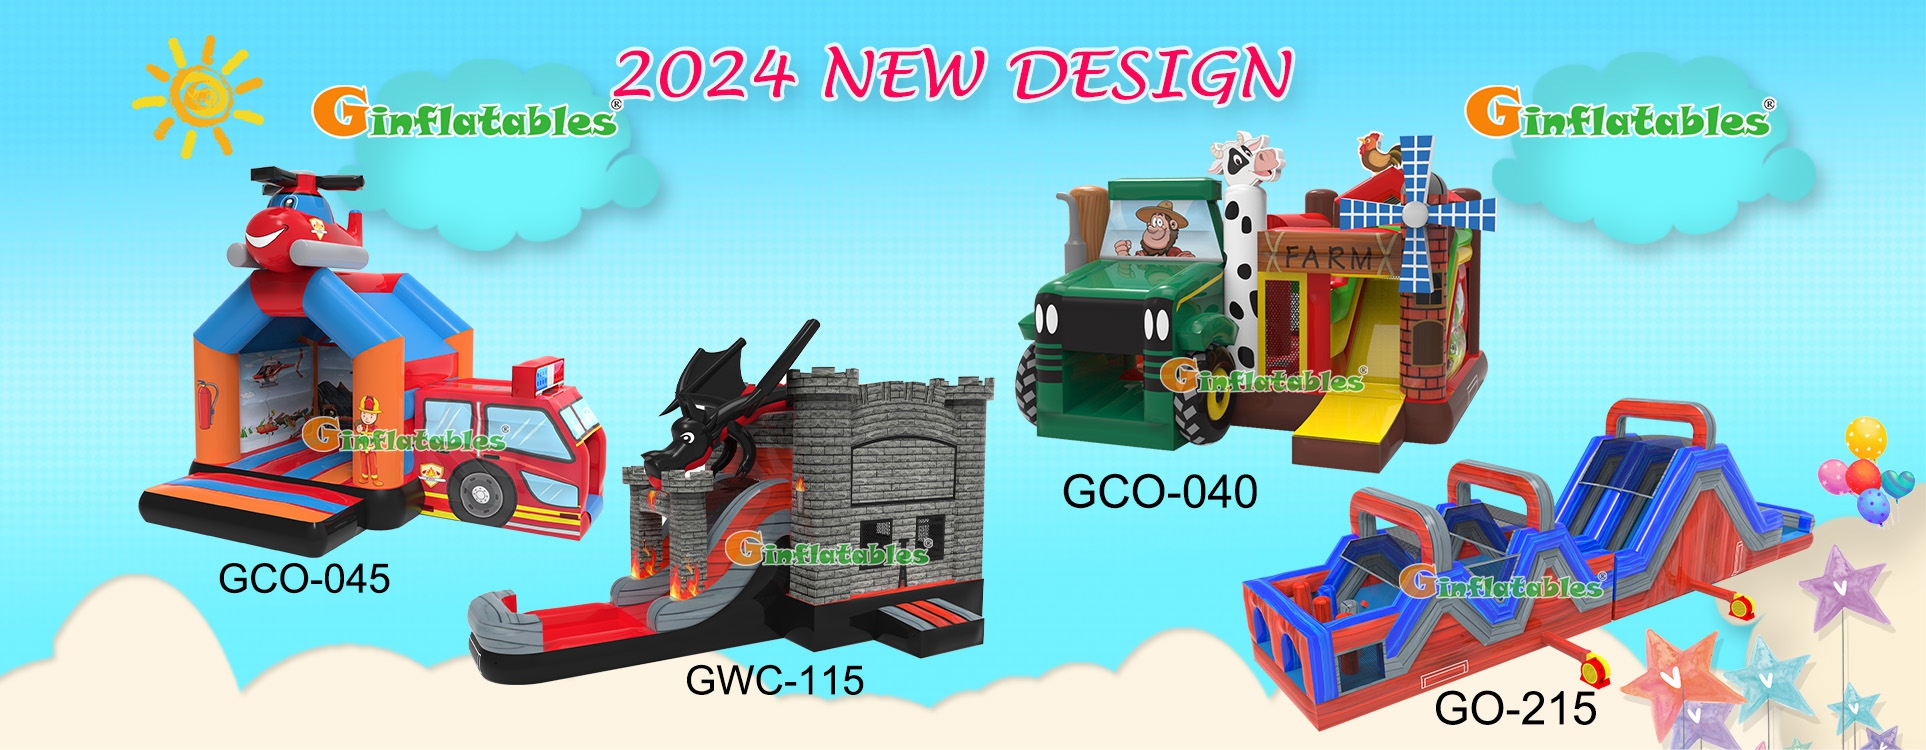 2024-New-Design-1